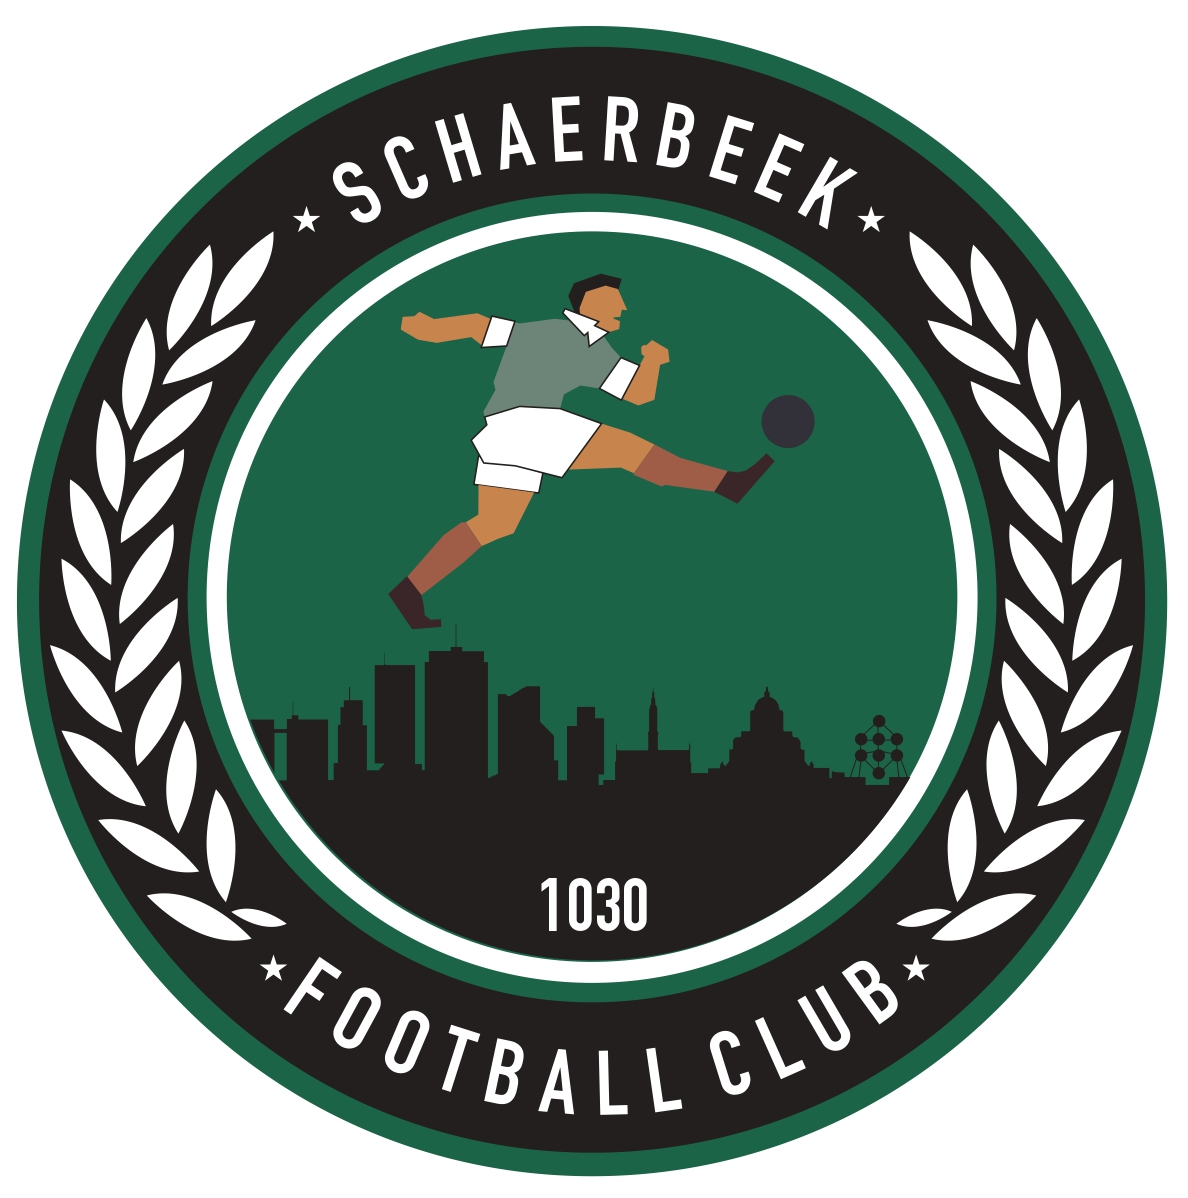 10 - Football Club Schaerbeek